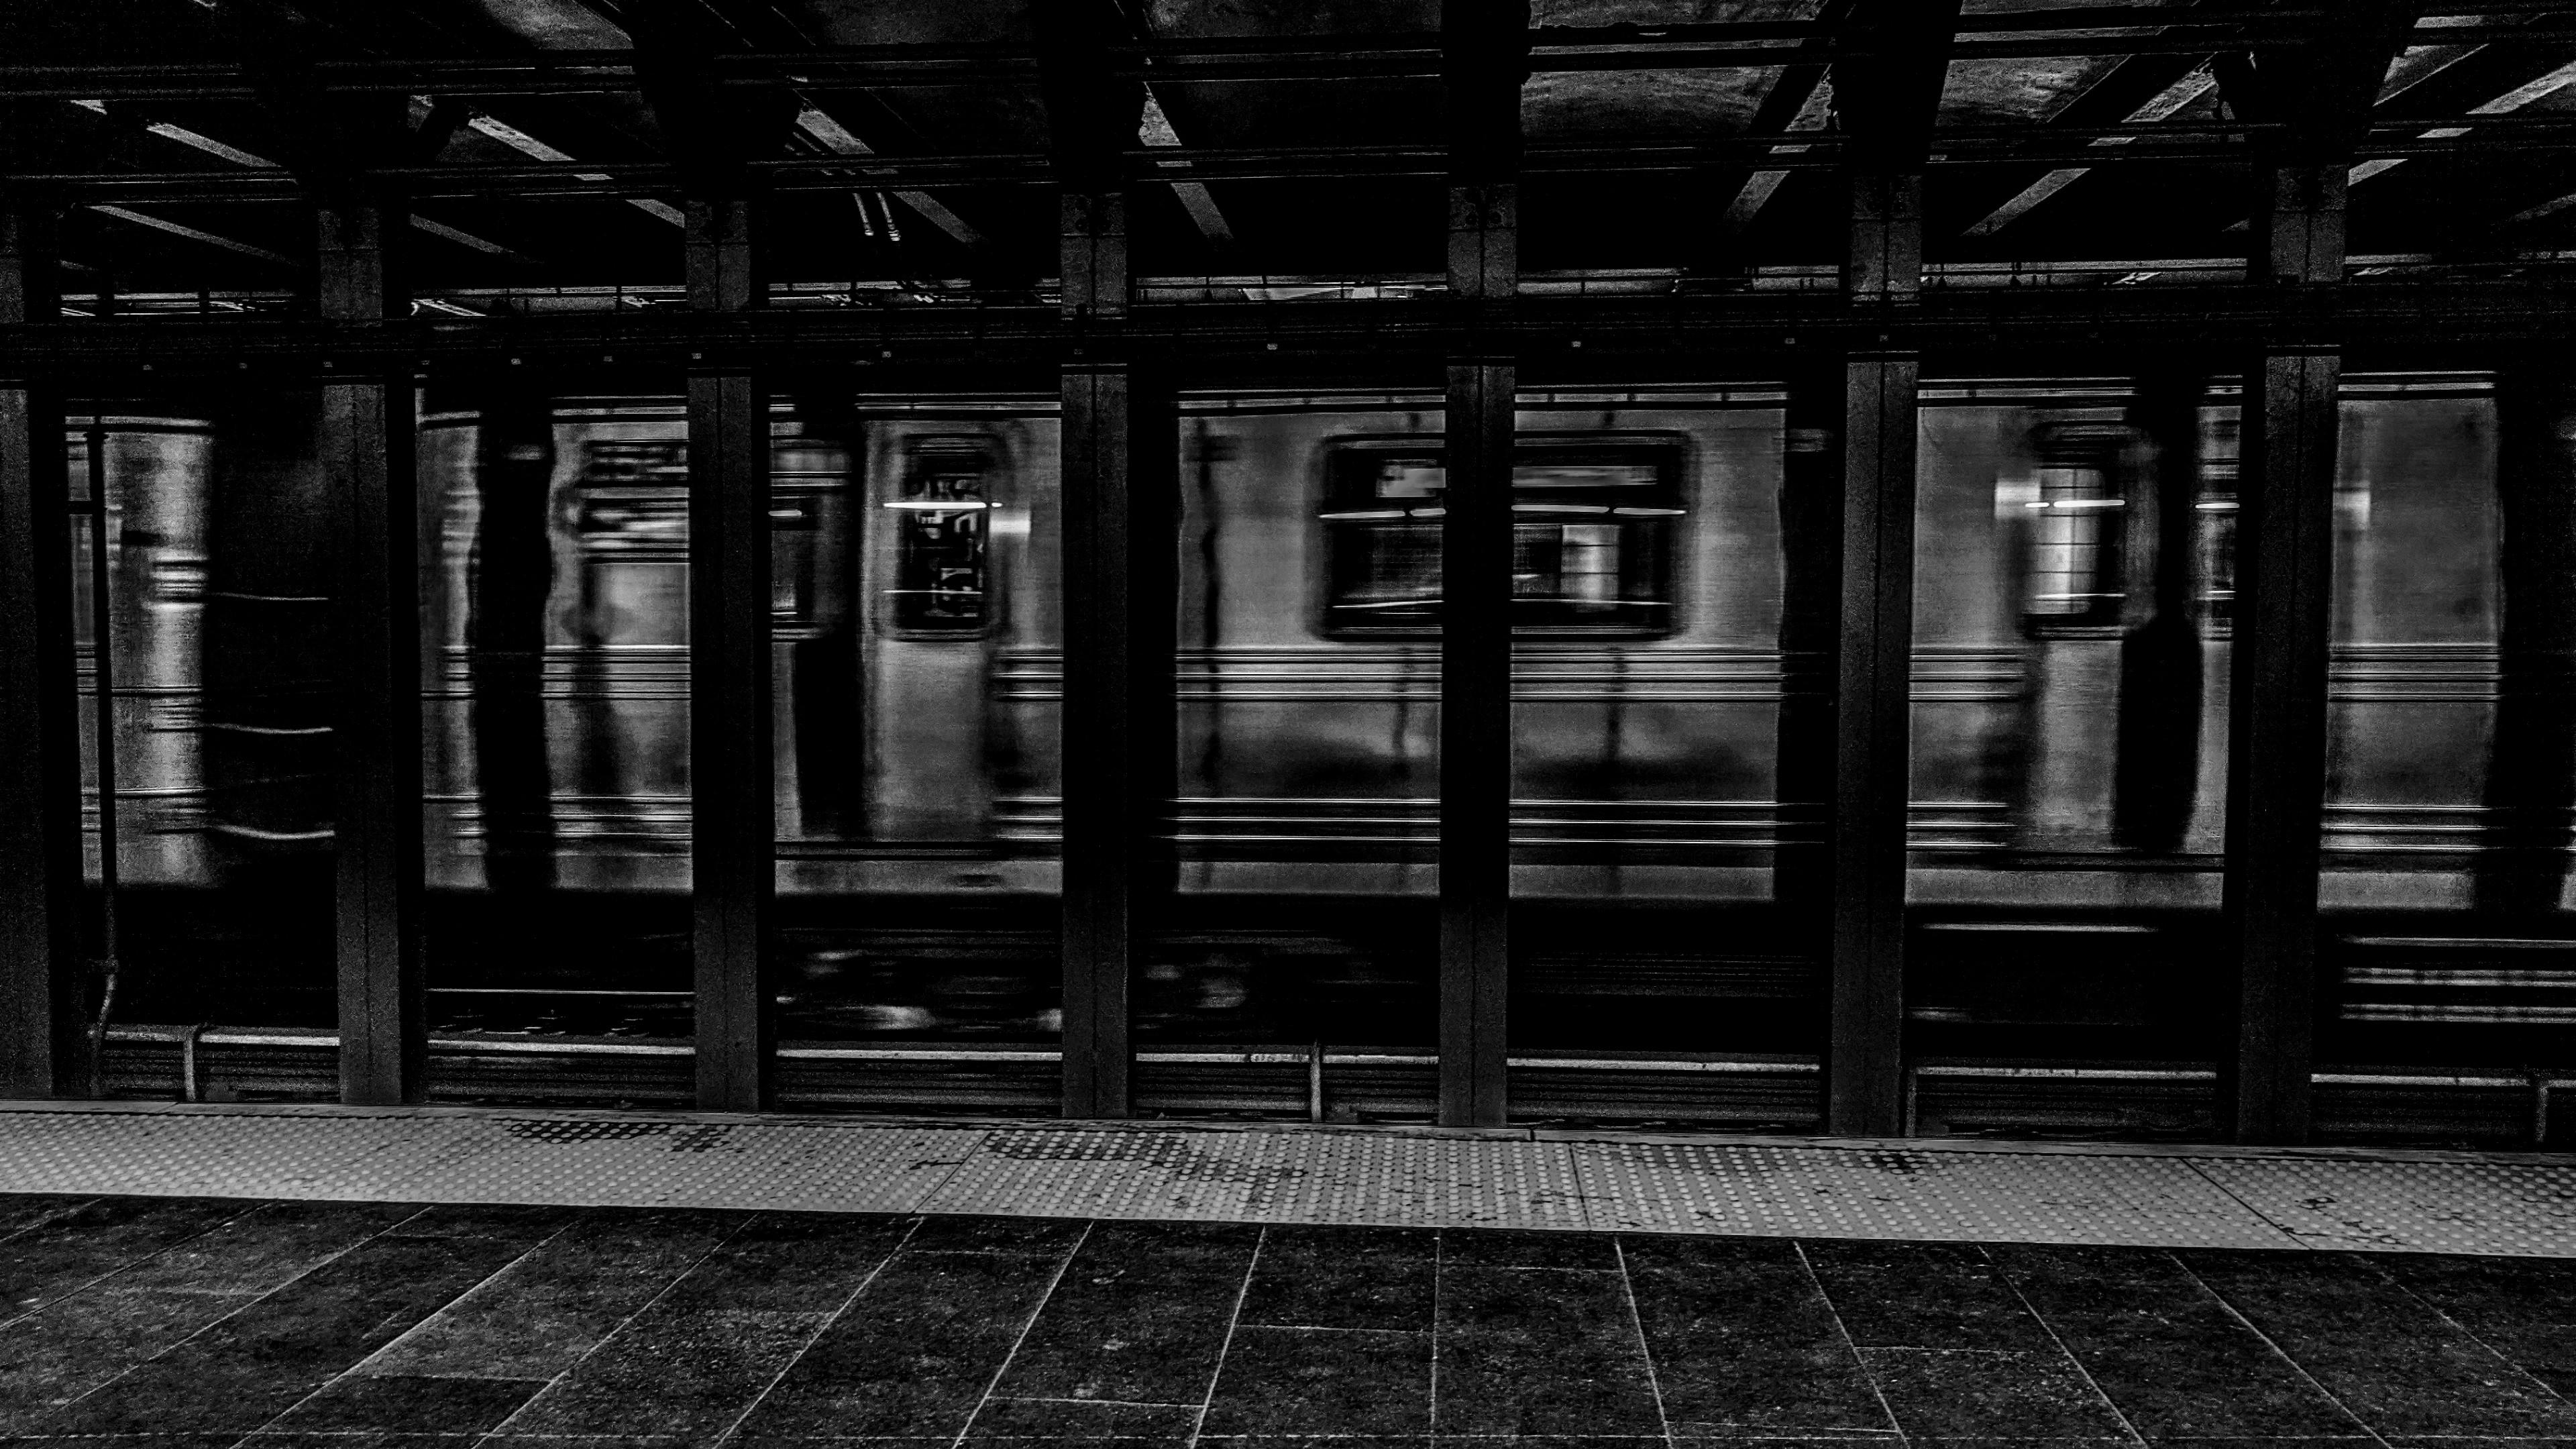 General 3840x2160 New York City subway monochrome urban